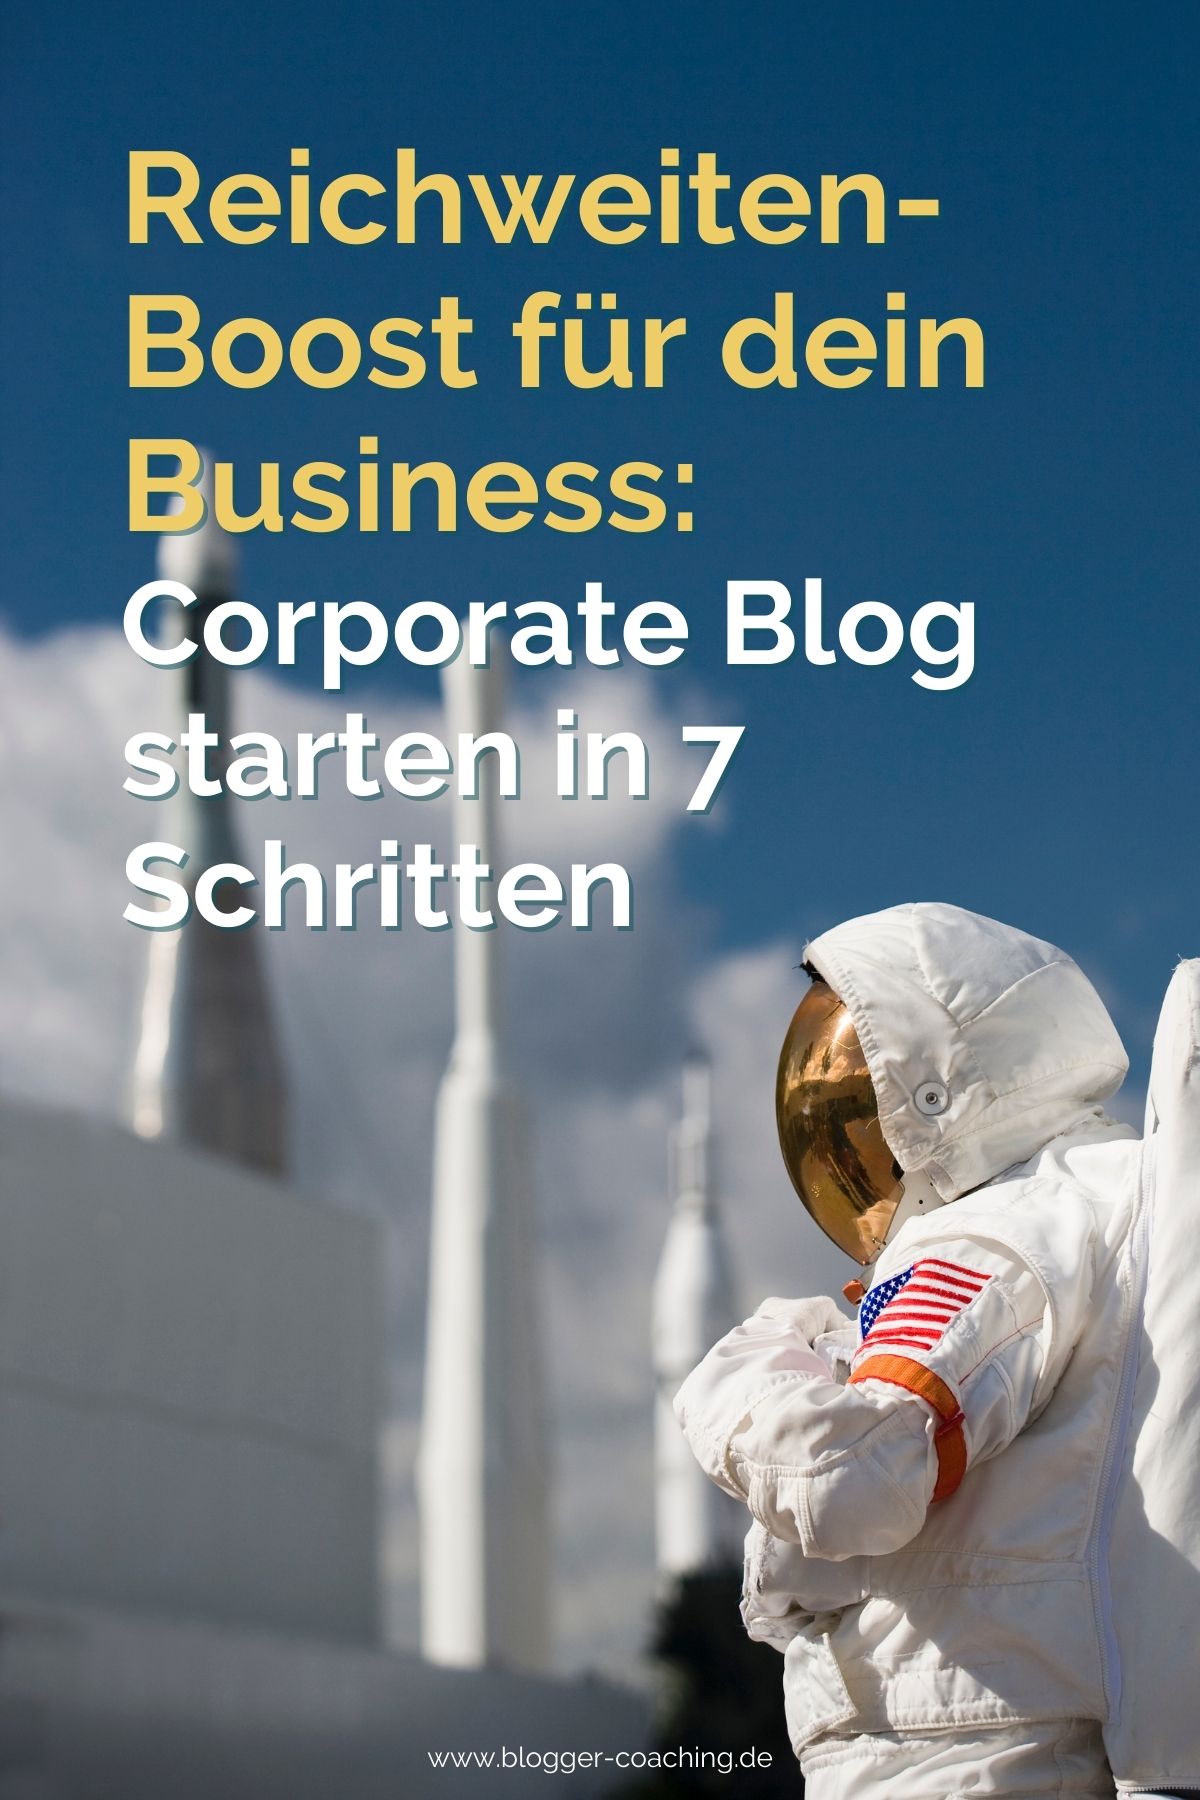 Business Blog starten in 7 Schritten - Dein Blog Fahrplan | Blogger-Coaching.de